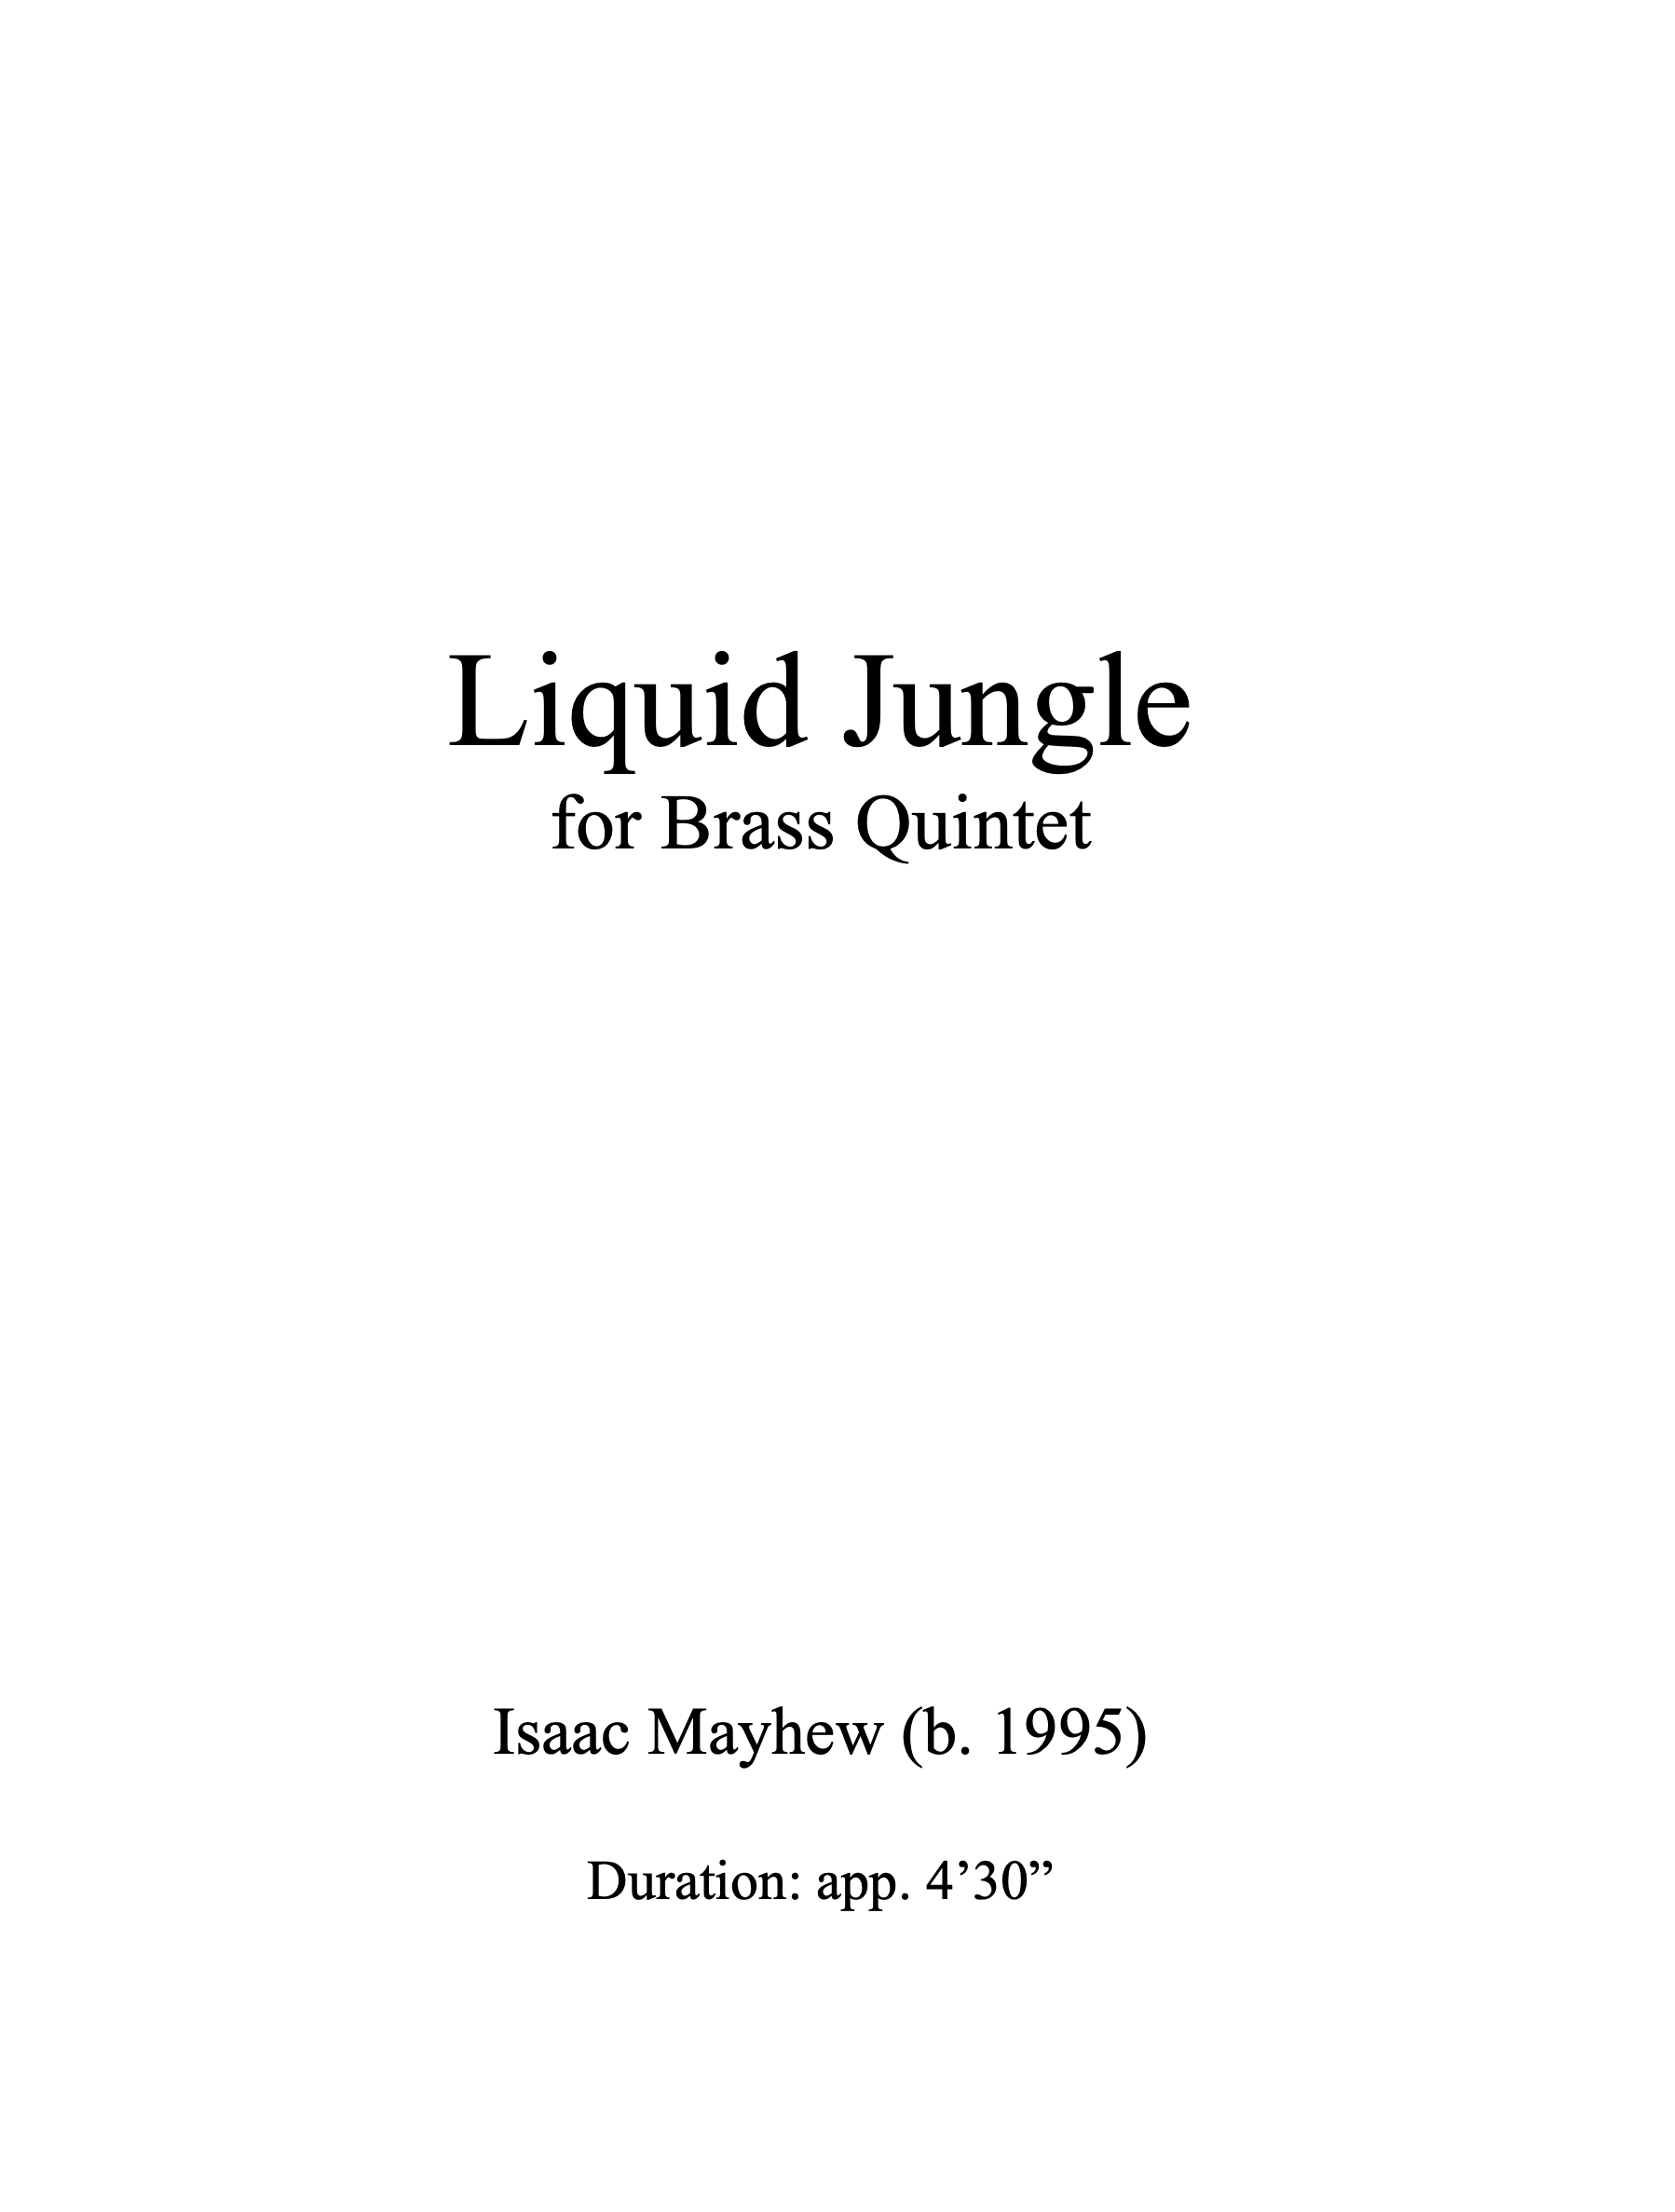 Liquid Jungle by Isaac Mayhew